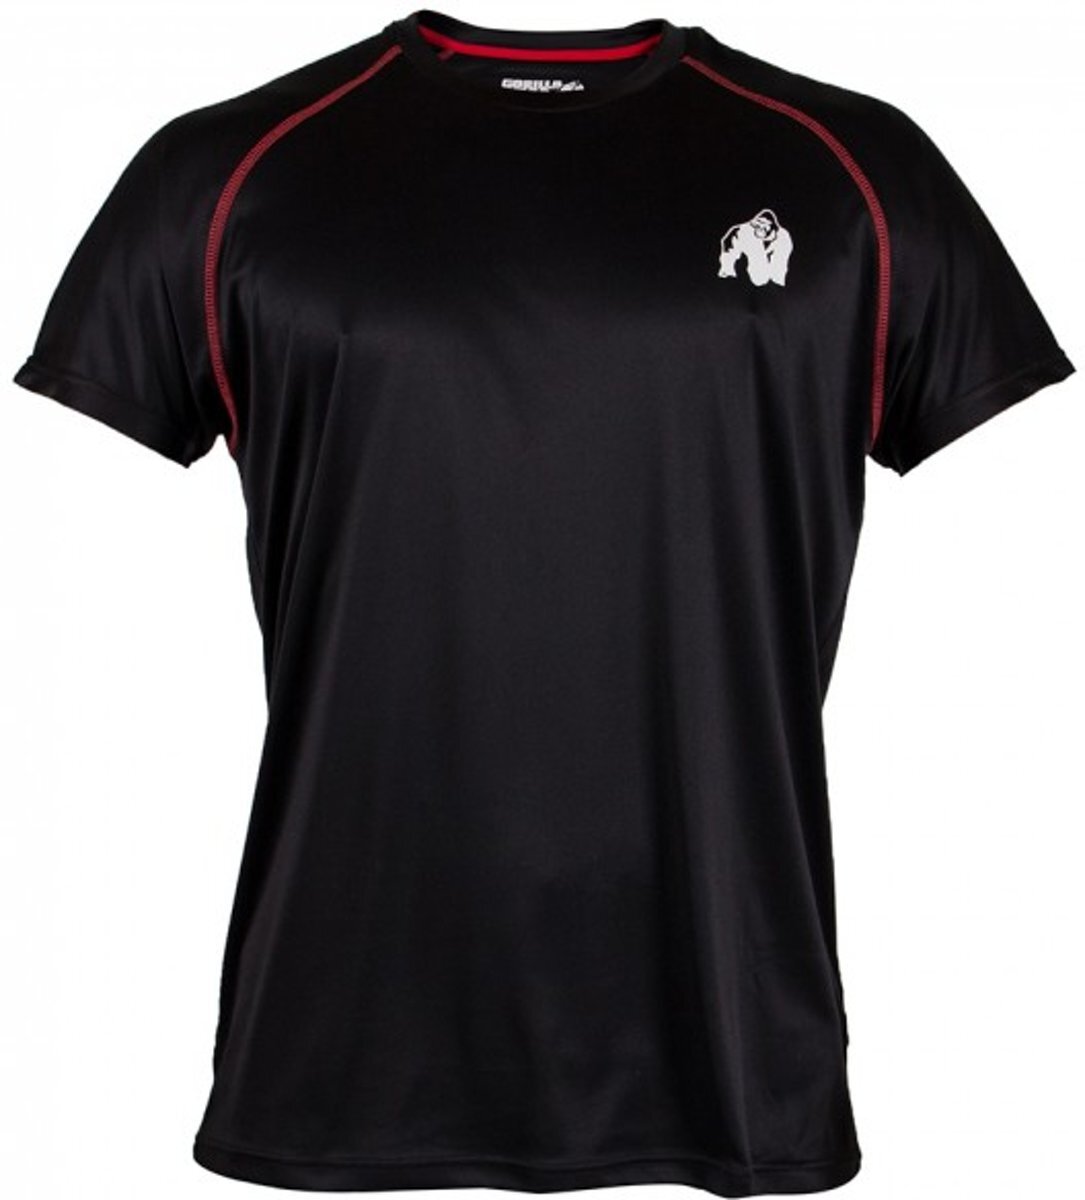 Gorilla Wear Performance t-shirt Black/red - M